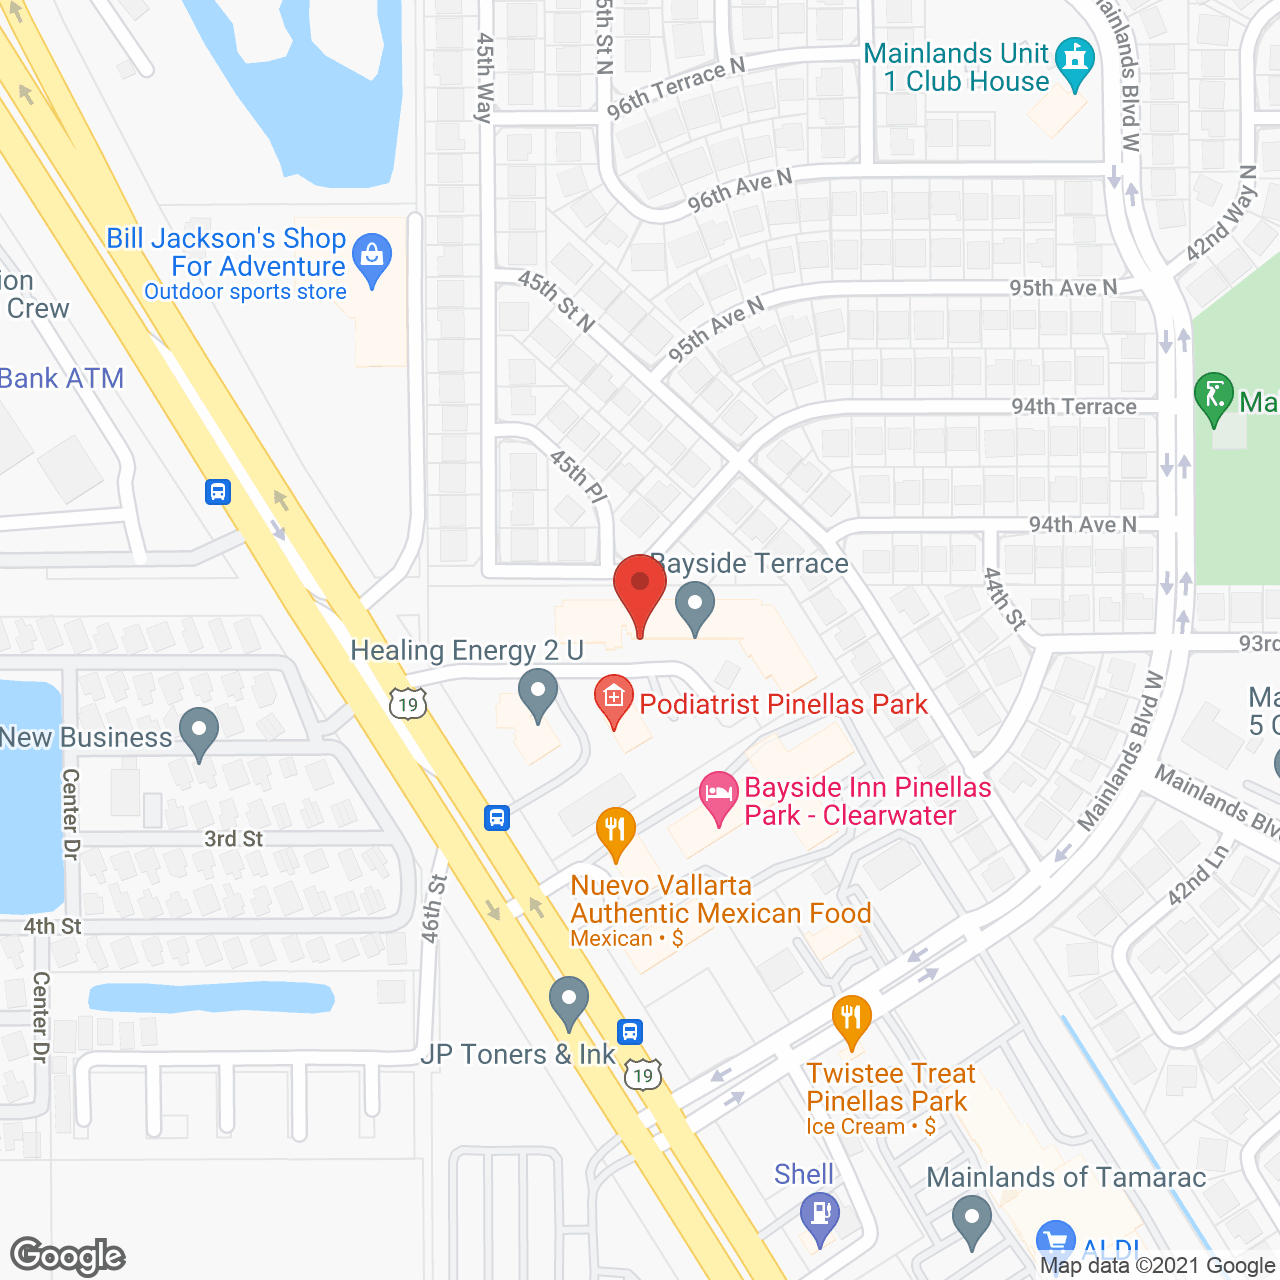 Bayside Terrace in google map